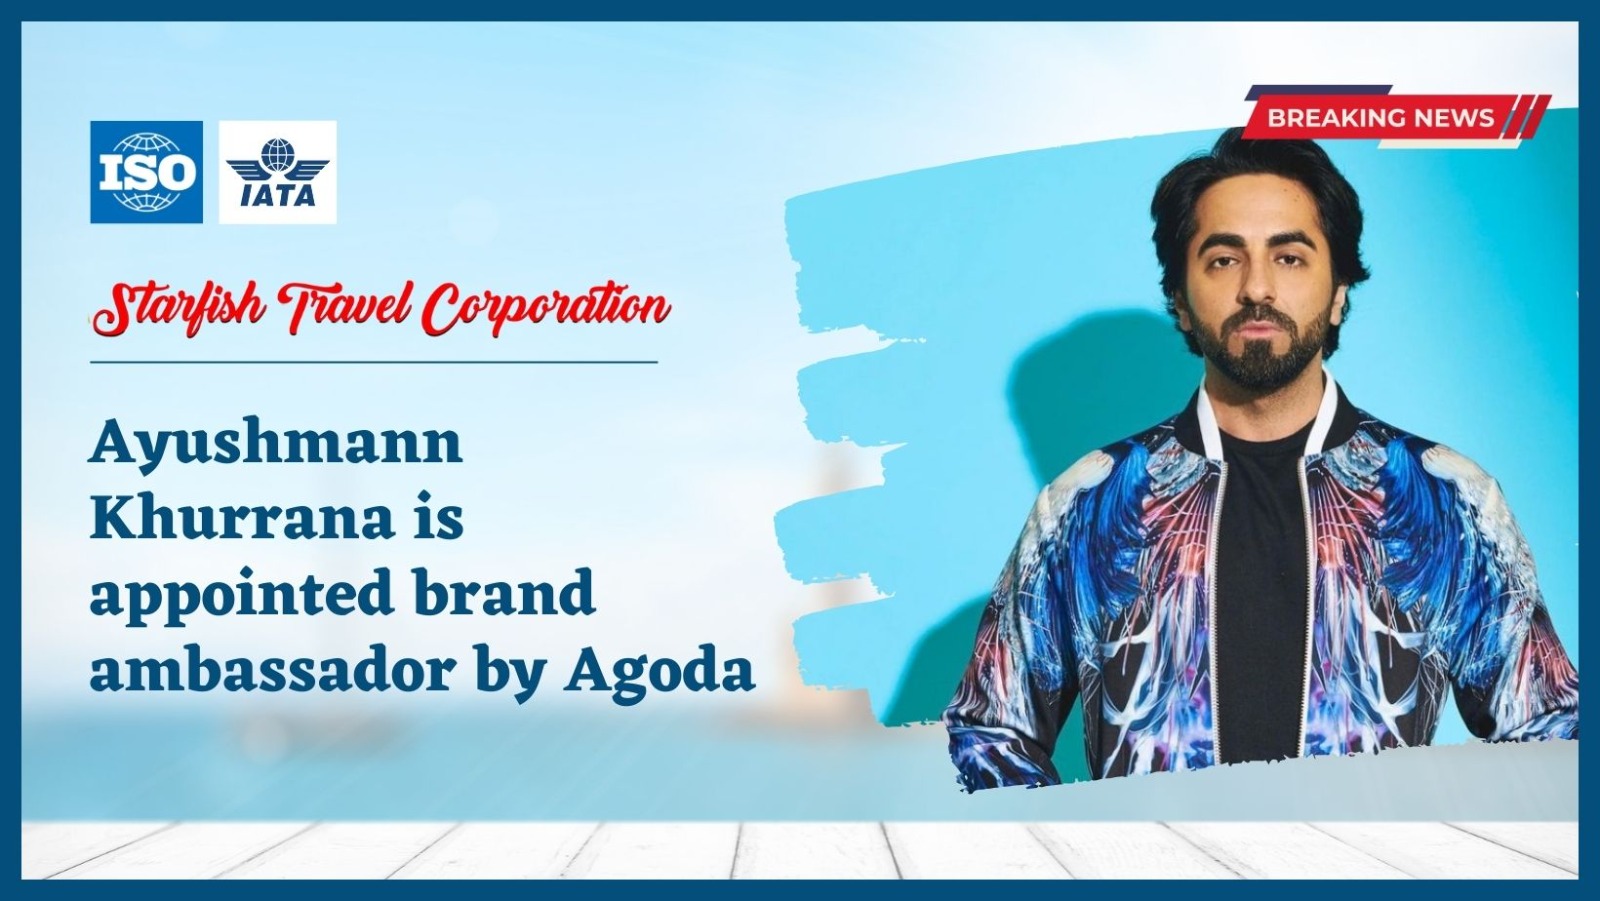 Ayushmann Khurrana is appointed brand ambassador by Agoda